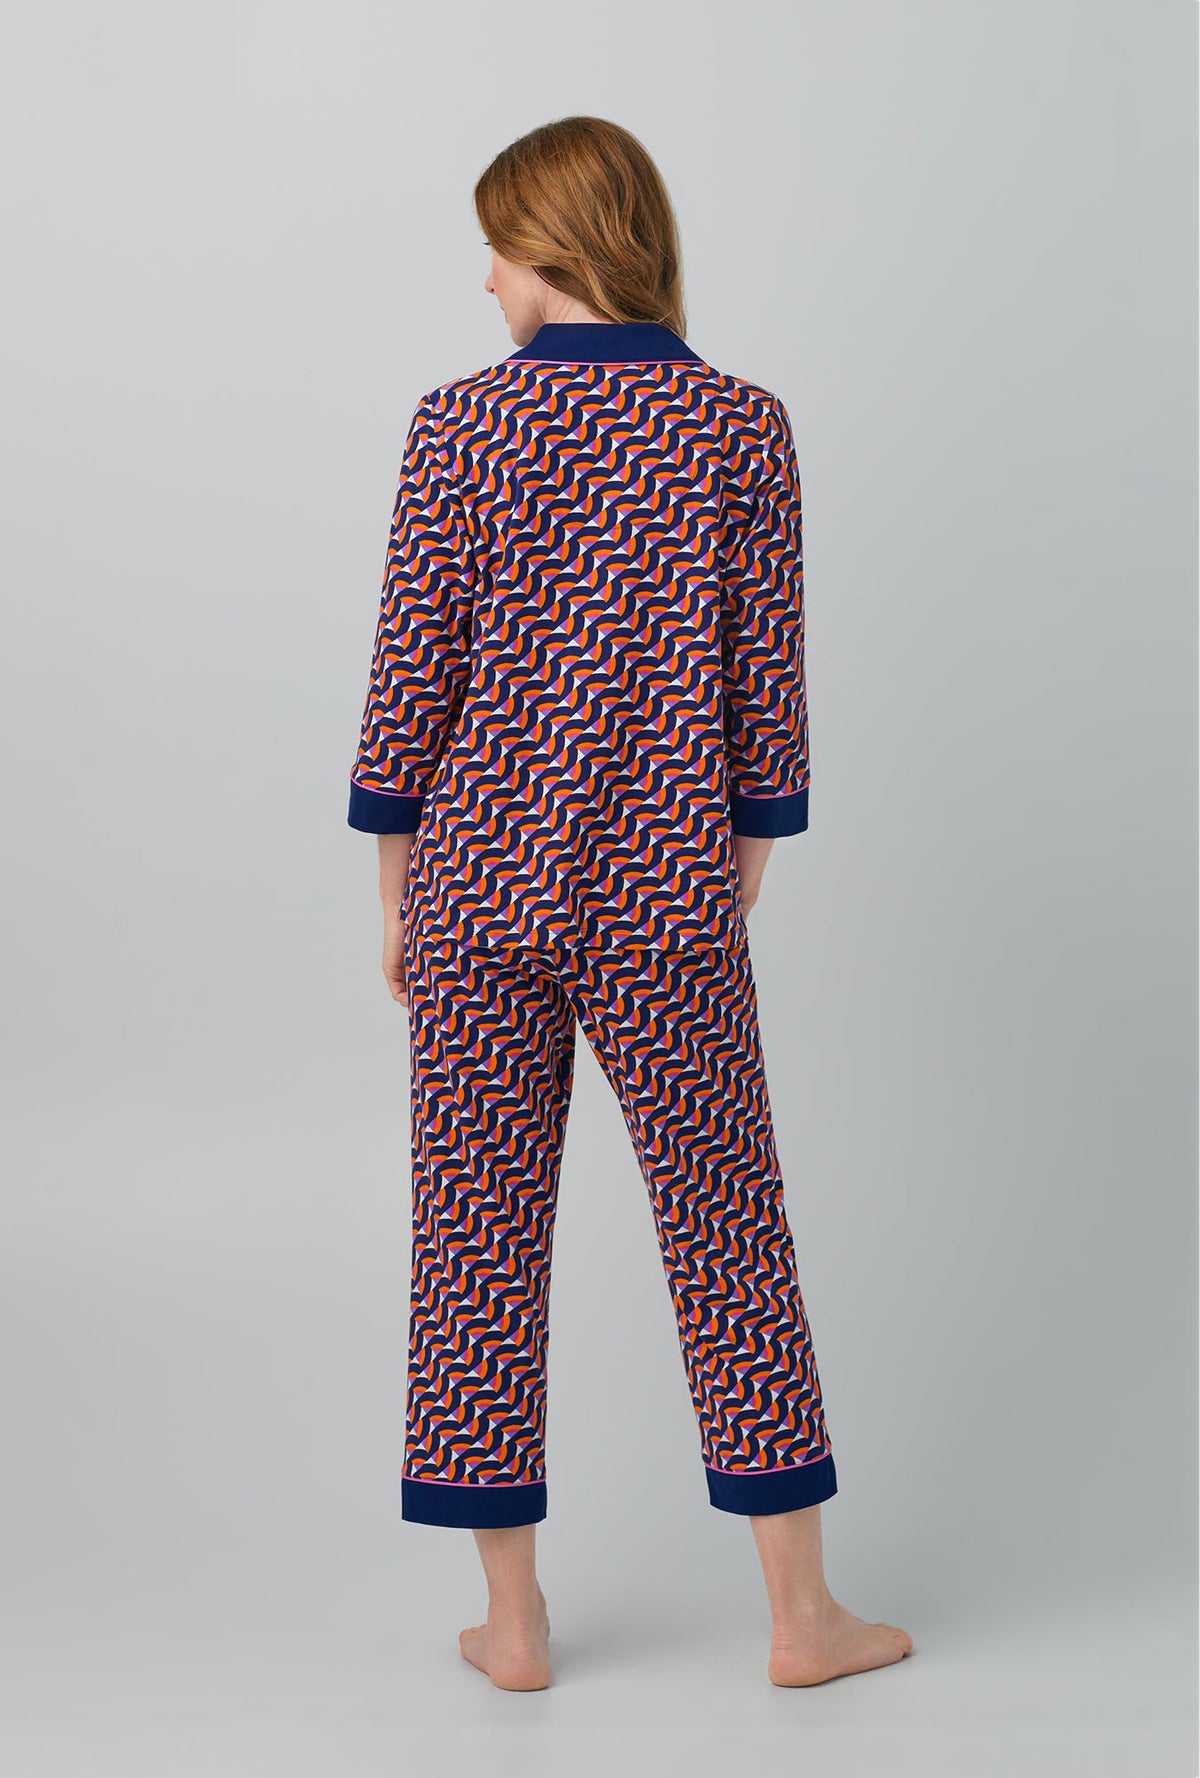 A lady wearing Geo Rainbow 3/4 Sleeve Classic Stretch Jersey PJ Set